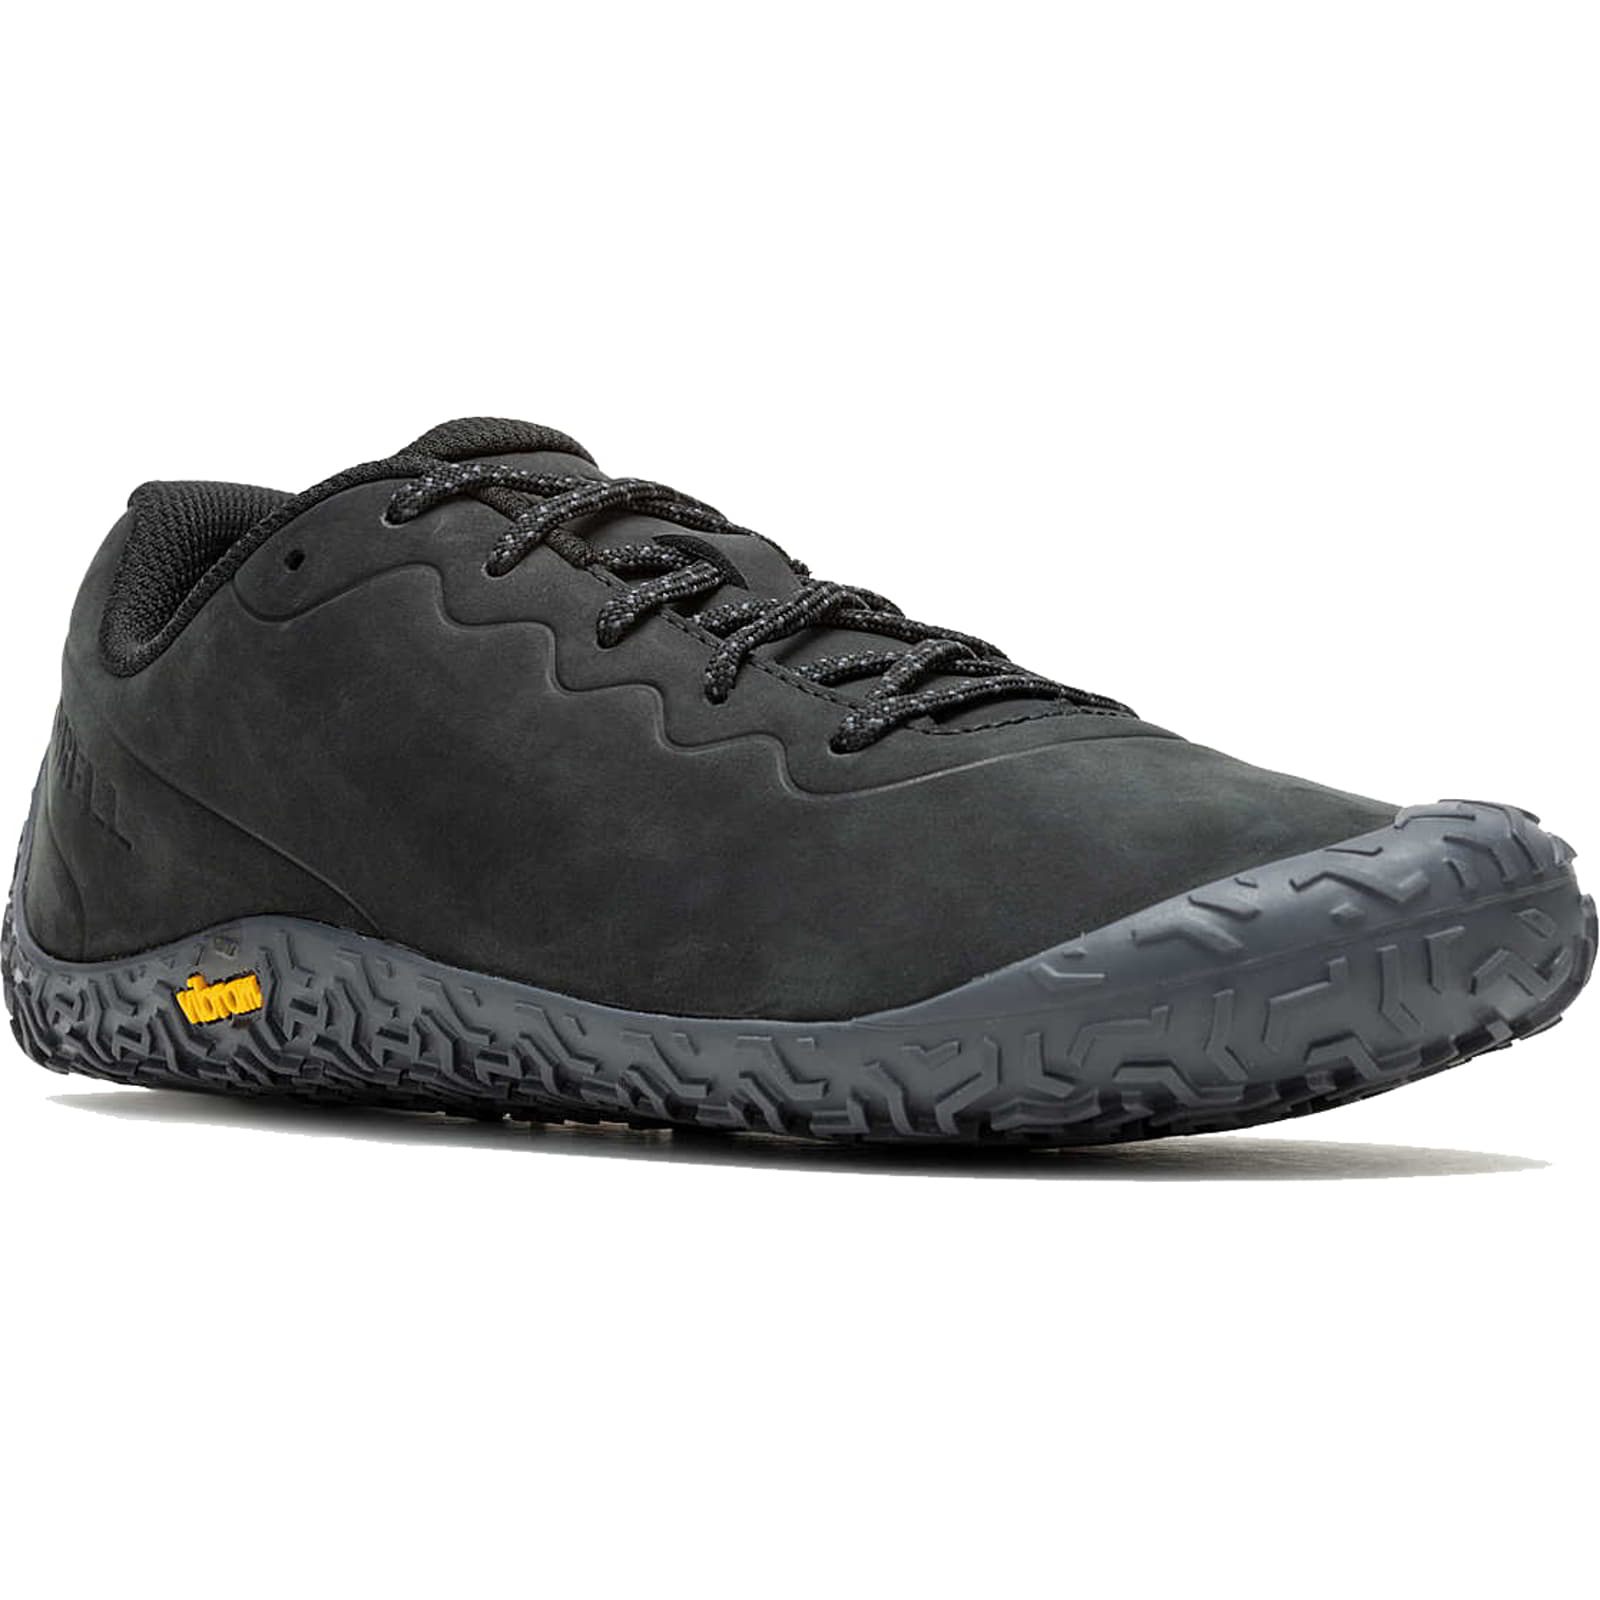 Merrell Men's Vapor Glove 6 Leather Barefoot Running Shoes Trainers - UK 9